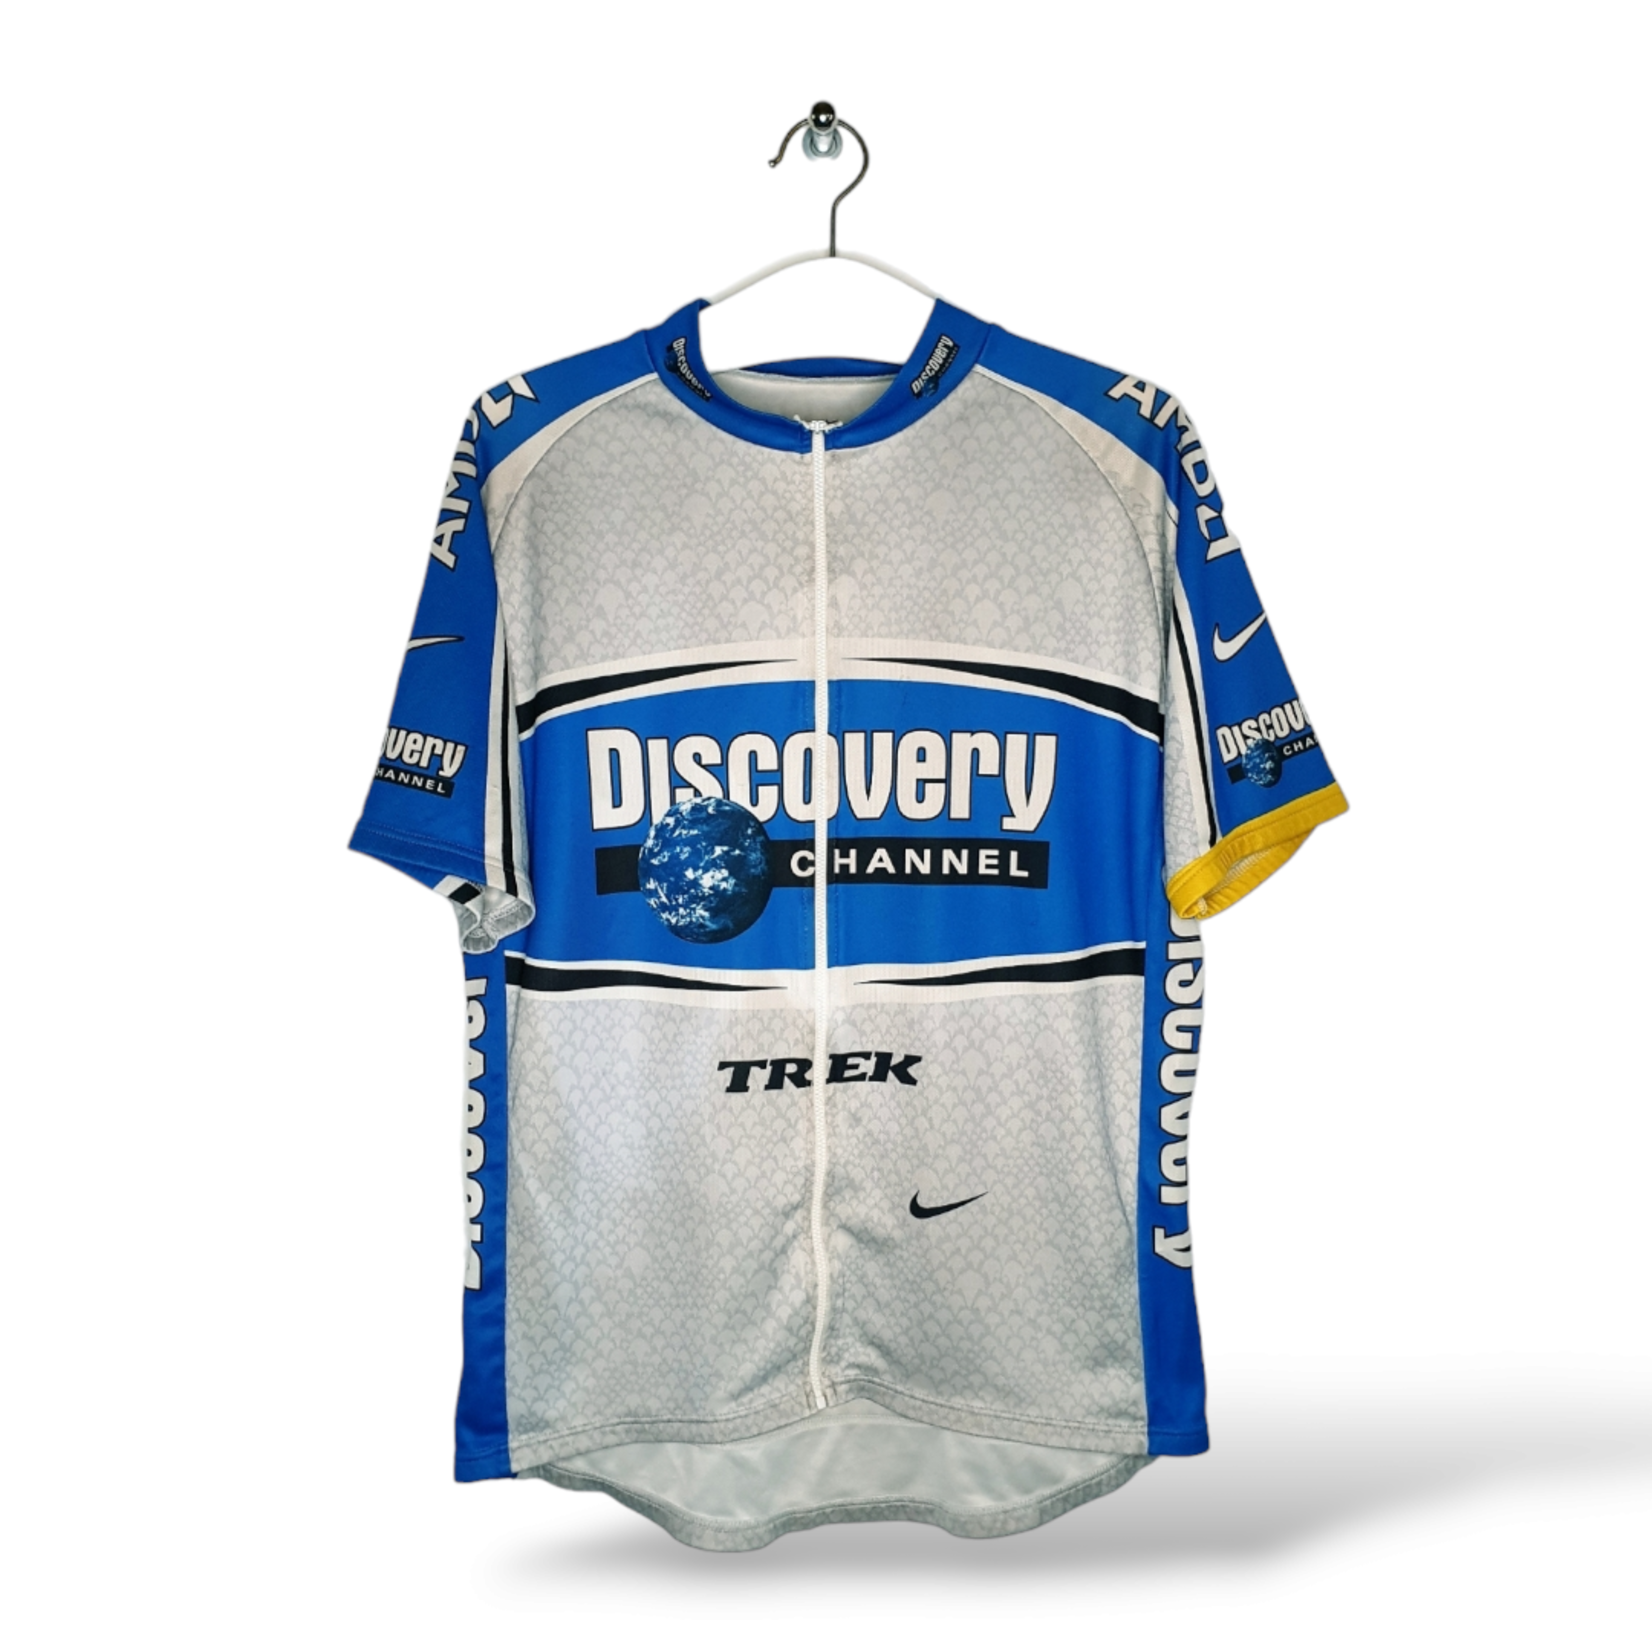 Nike Origineel Nike vintage wielershirt Discovery Channel Pro Cycling 2005